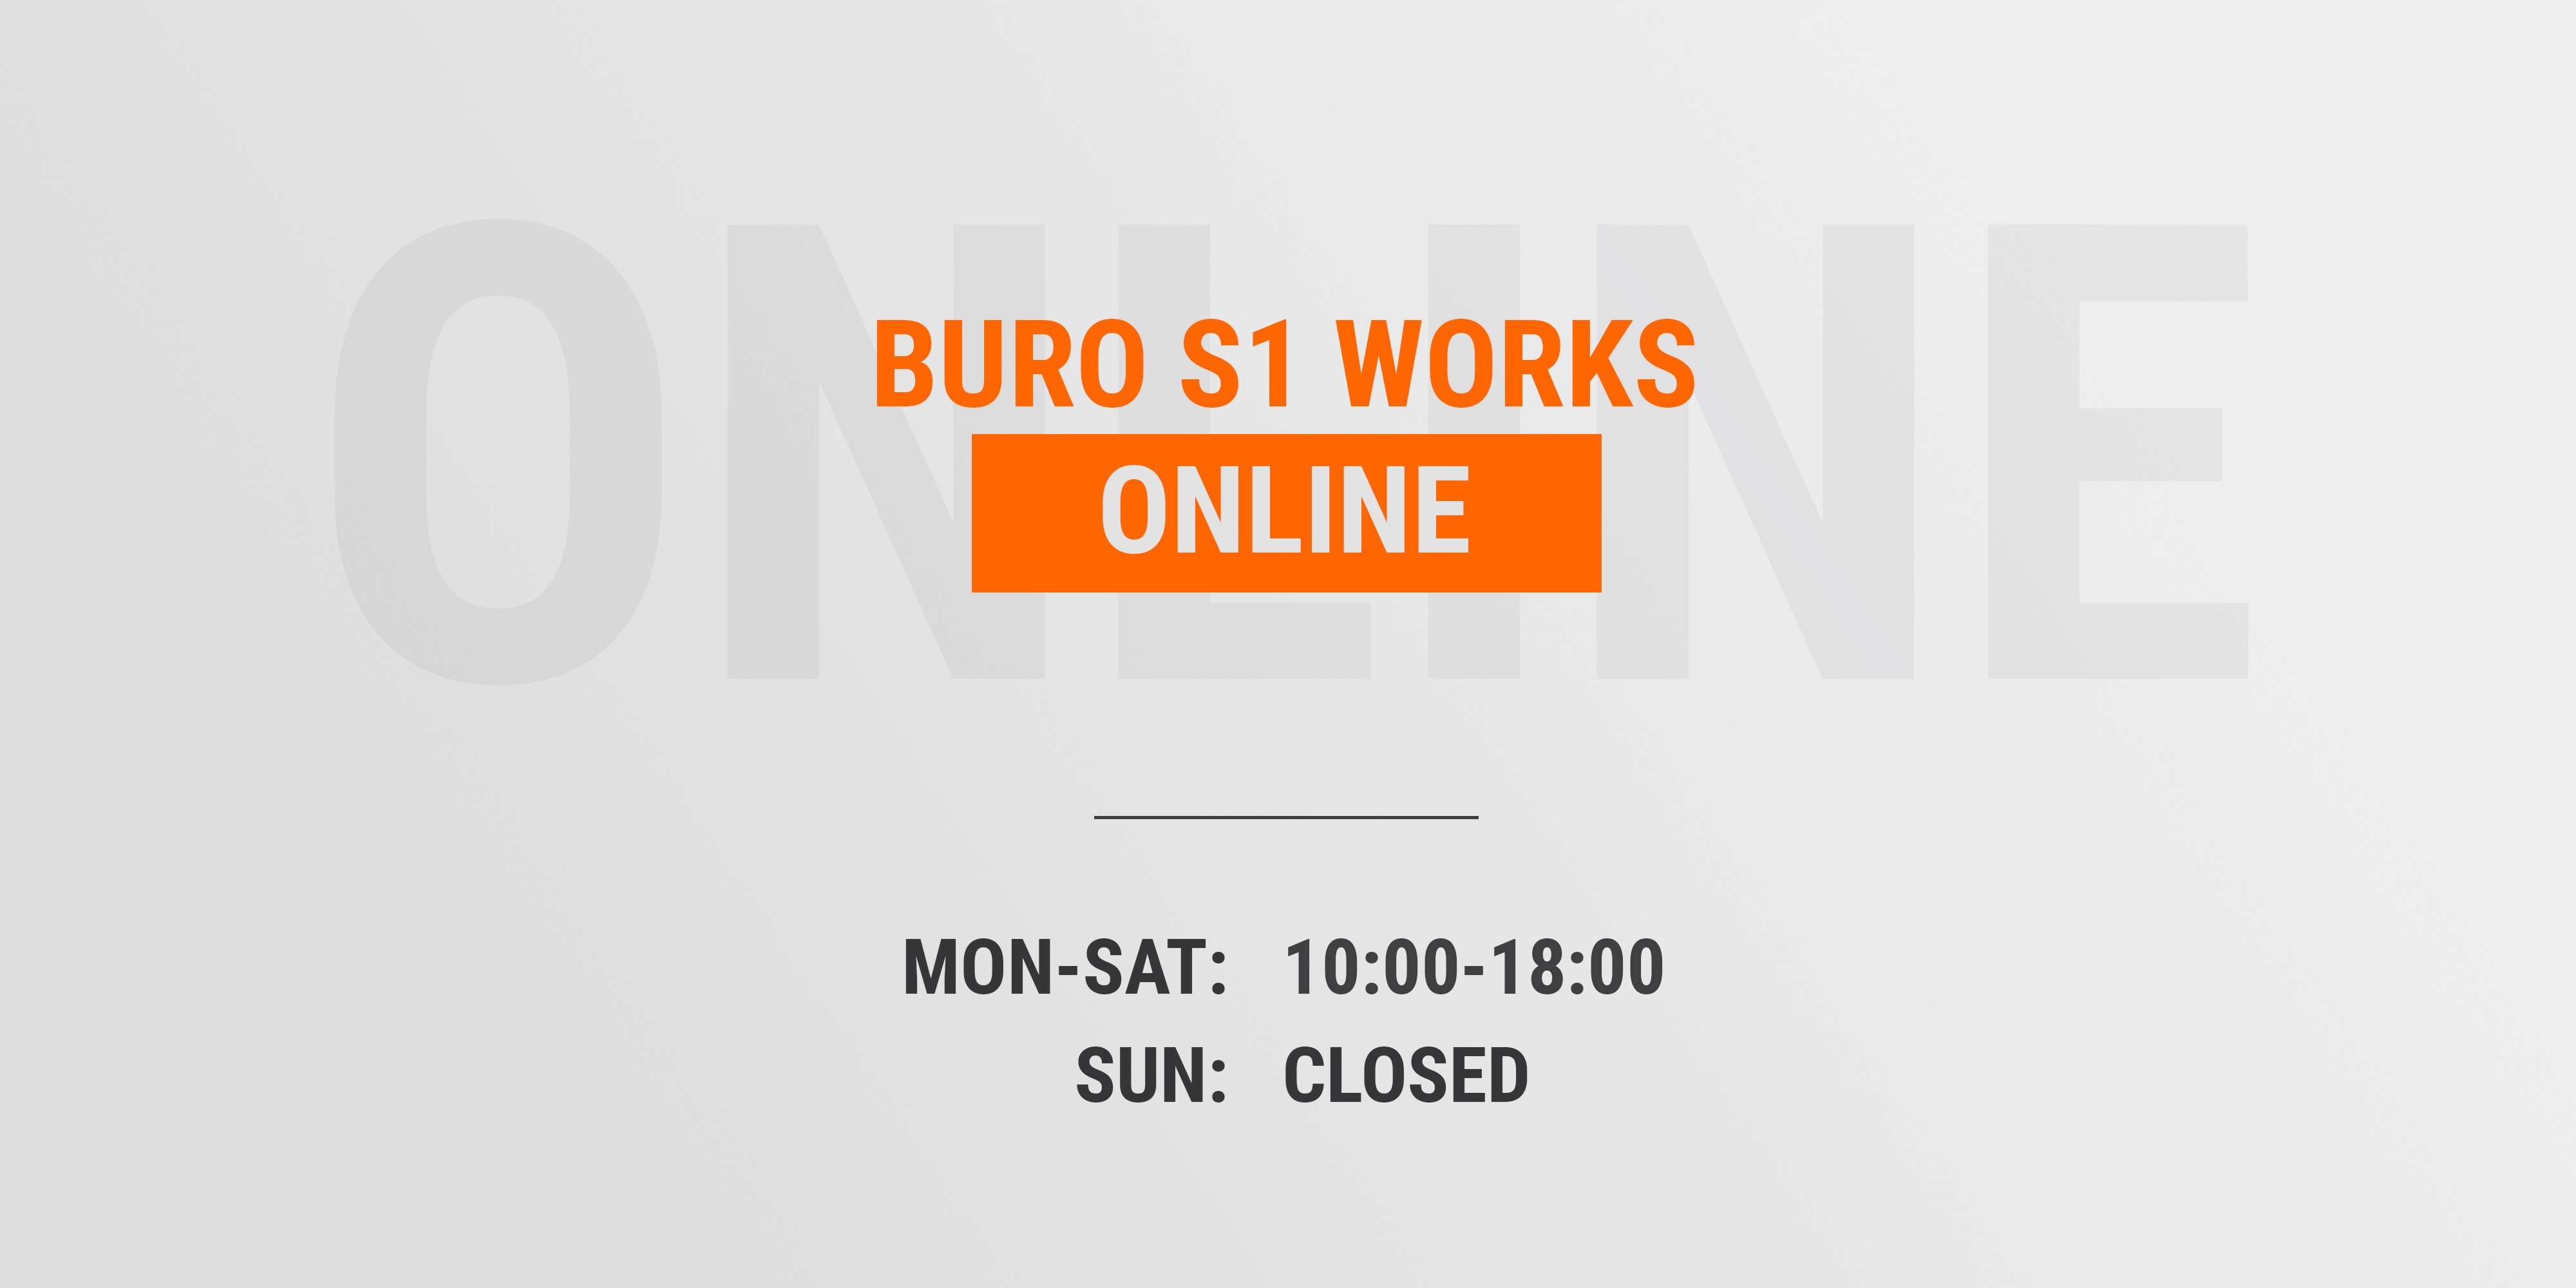 Buro S1 works online